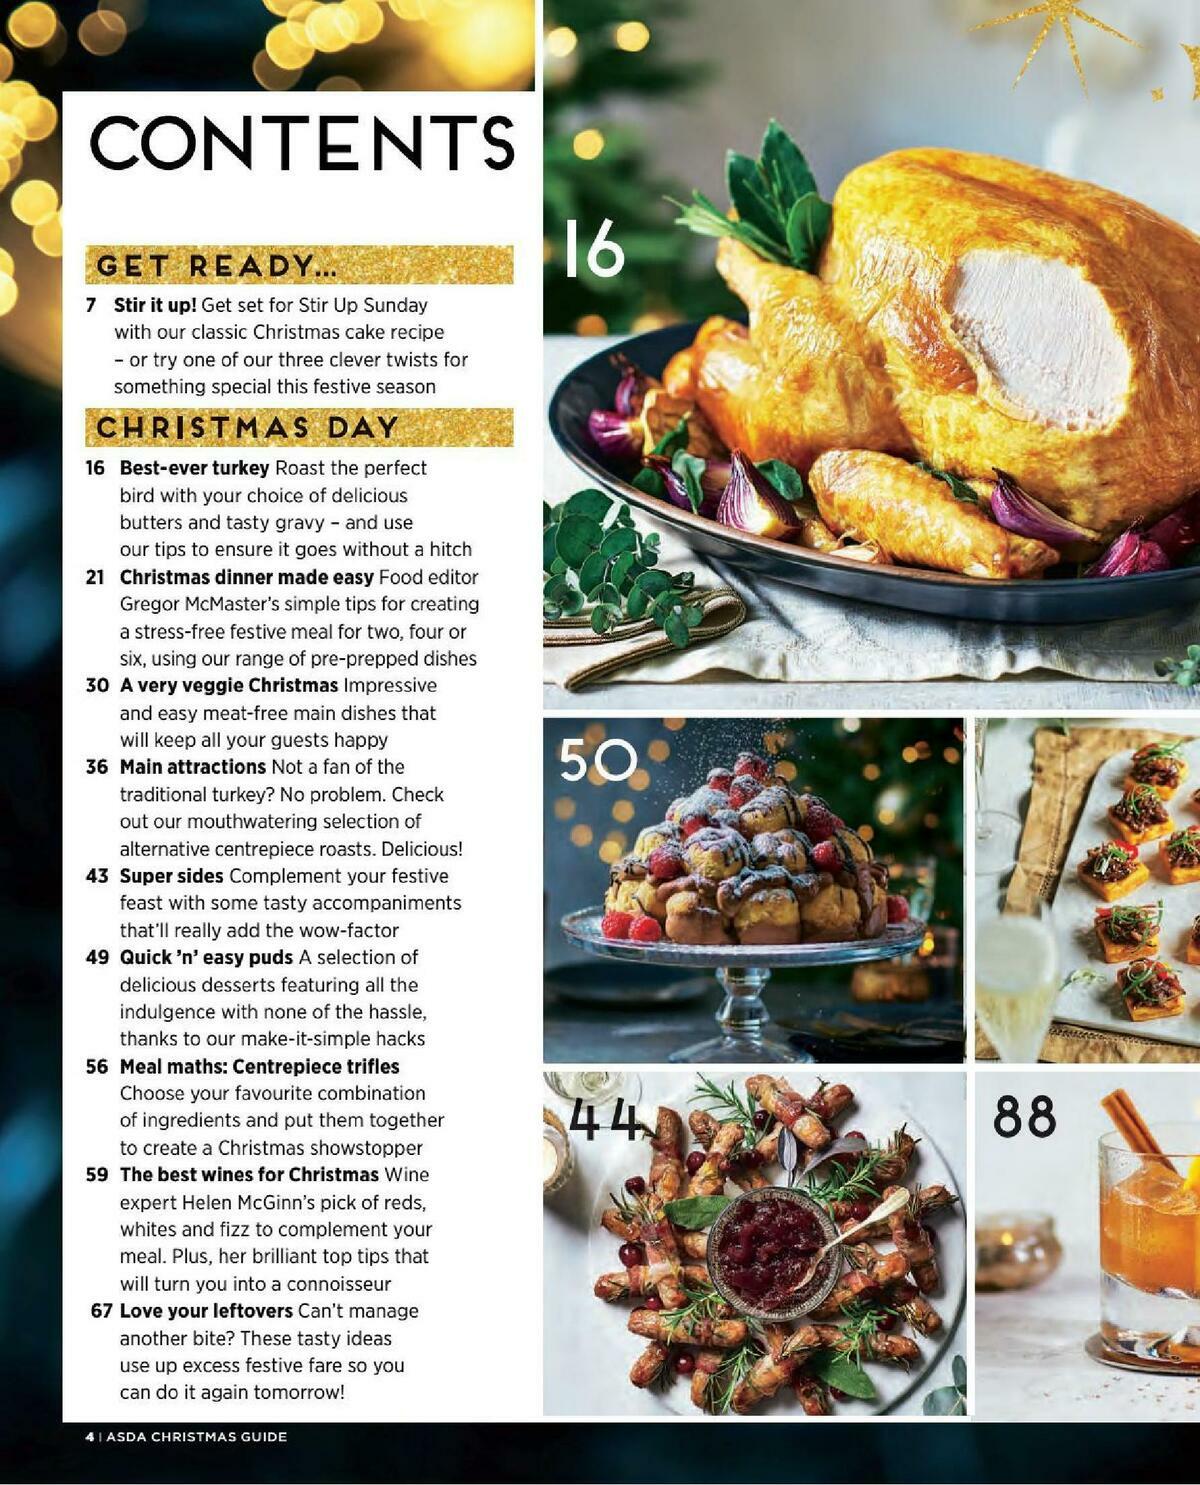 ASDA Magazine Christmas Guide 2020 Offers from 1 November